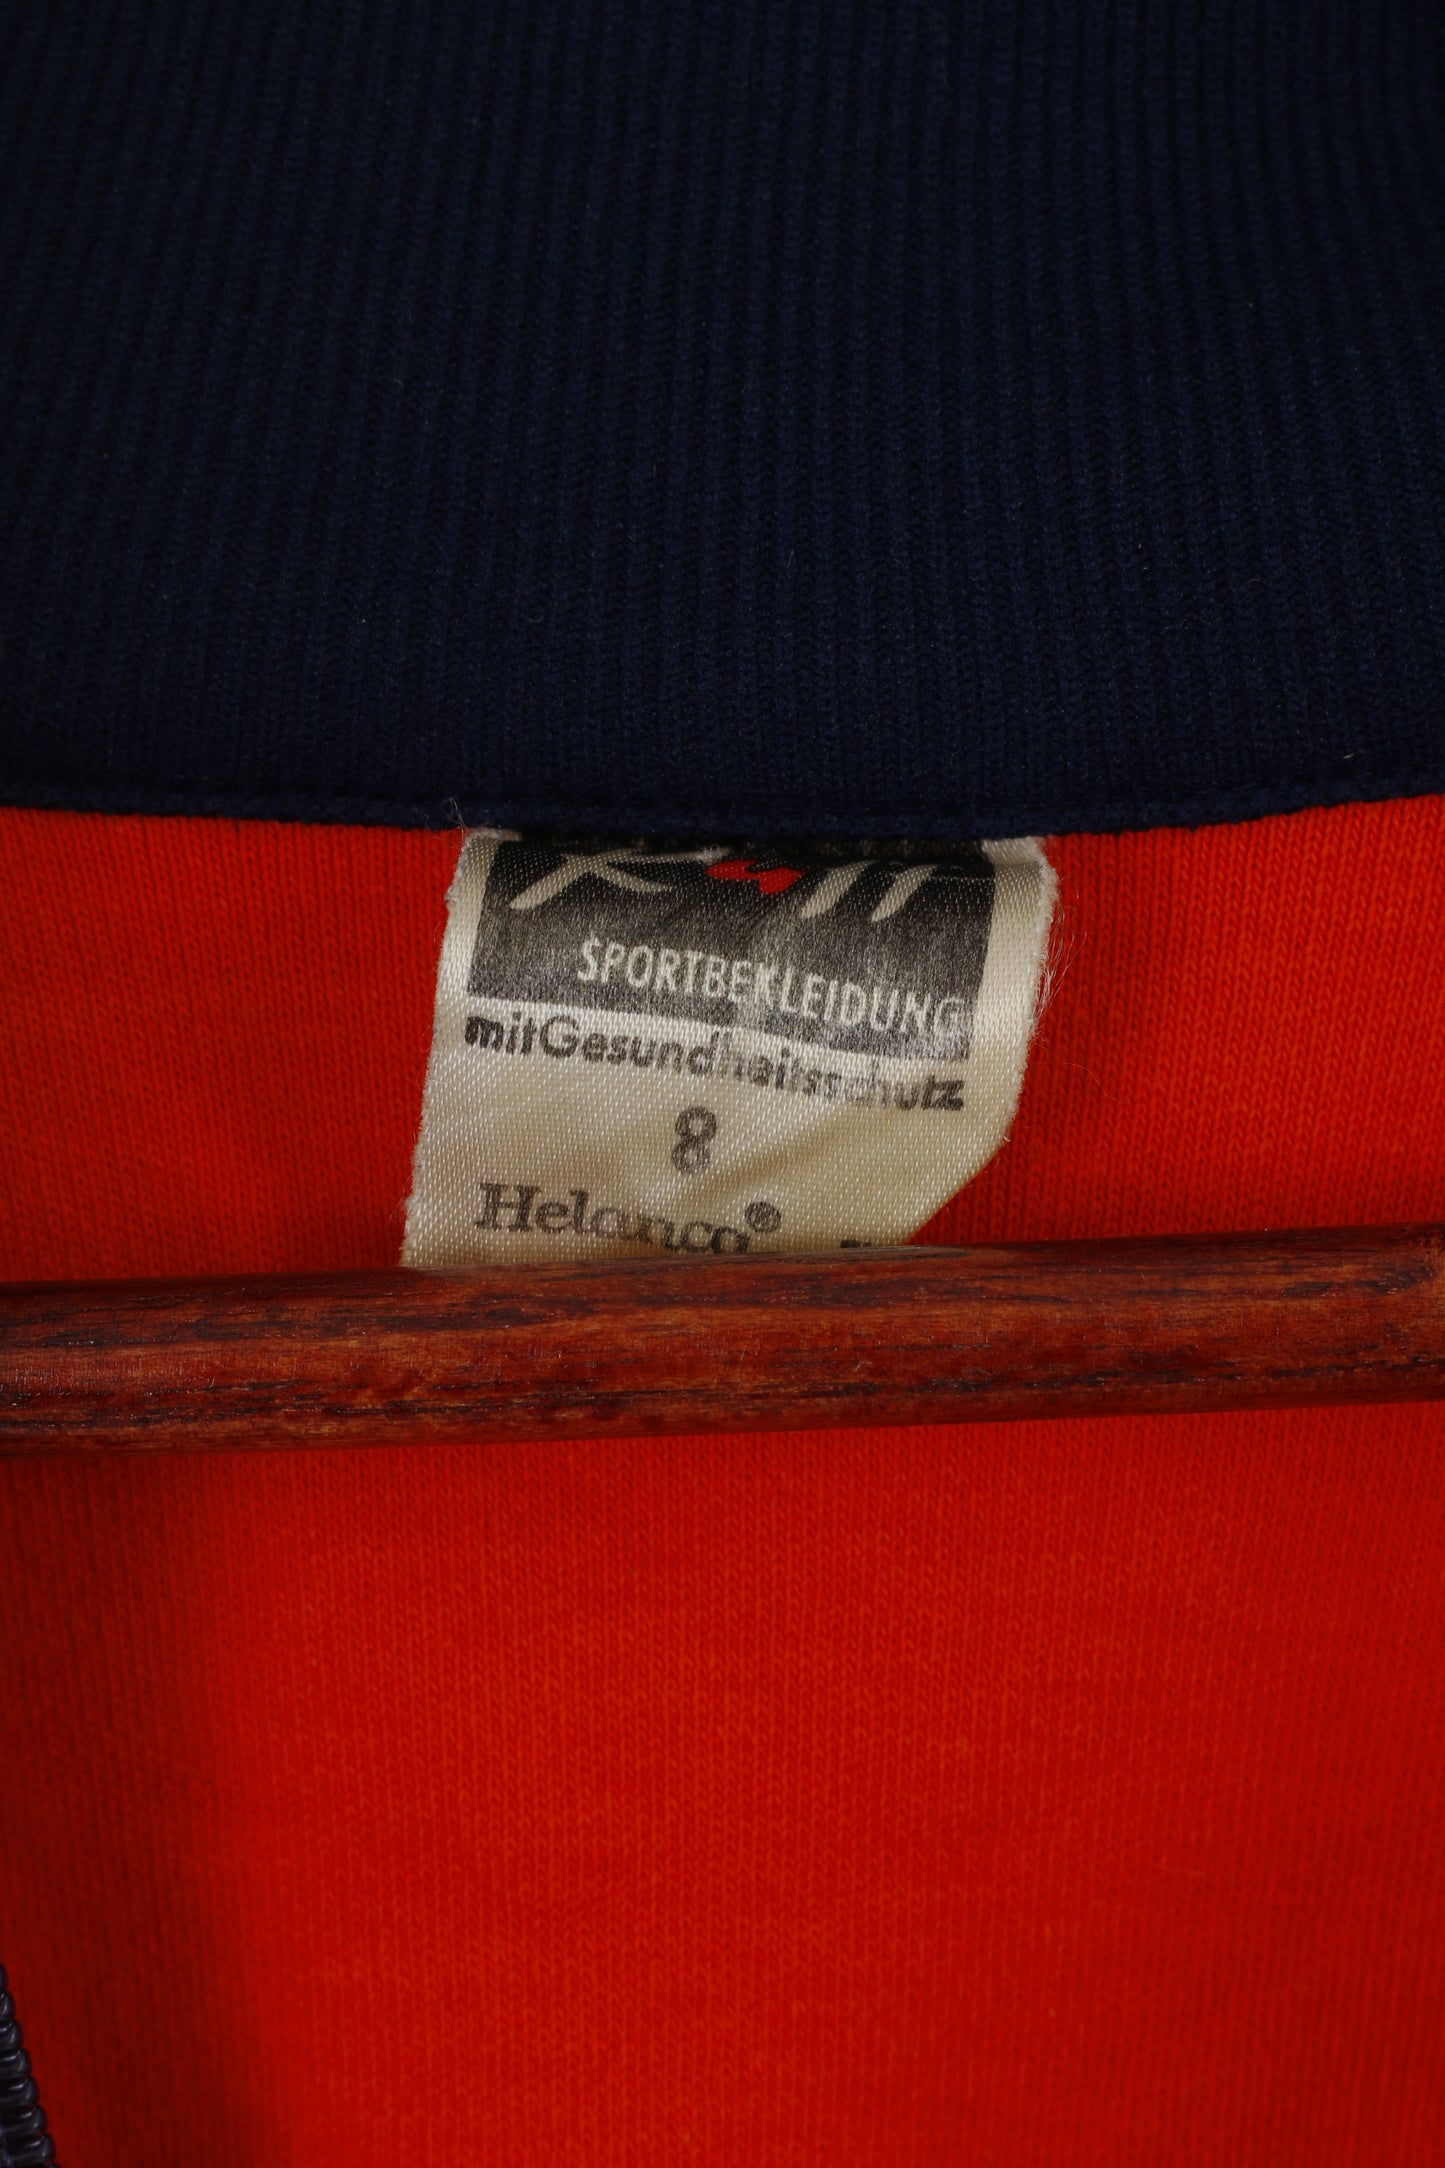 Ruff mit Gesunheitsschutz Men 8 L Sweatshirt Orange Nylon Vintage 80s Full Zipper Top